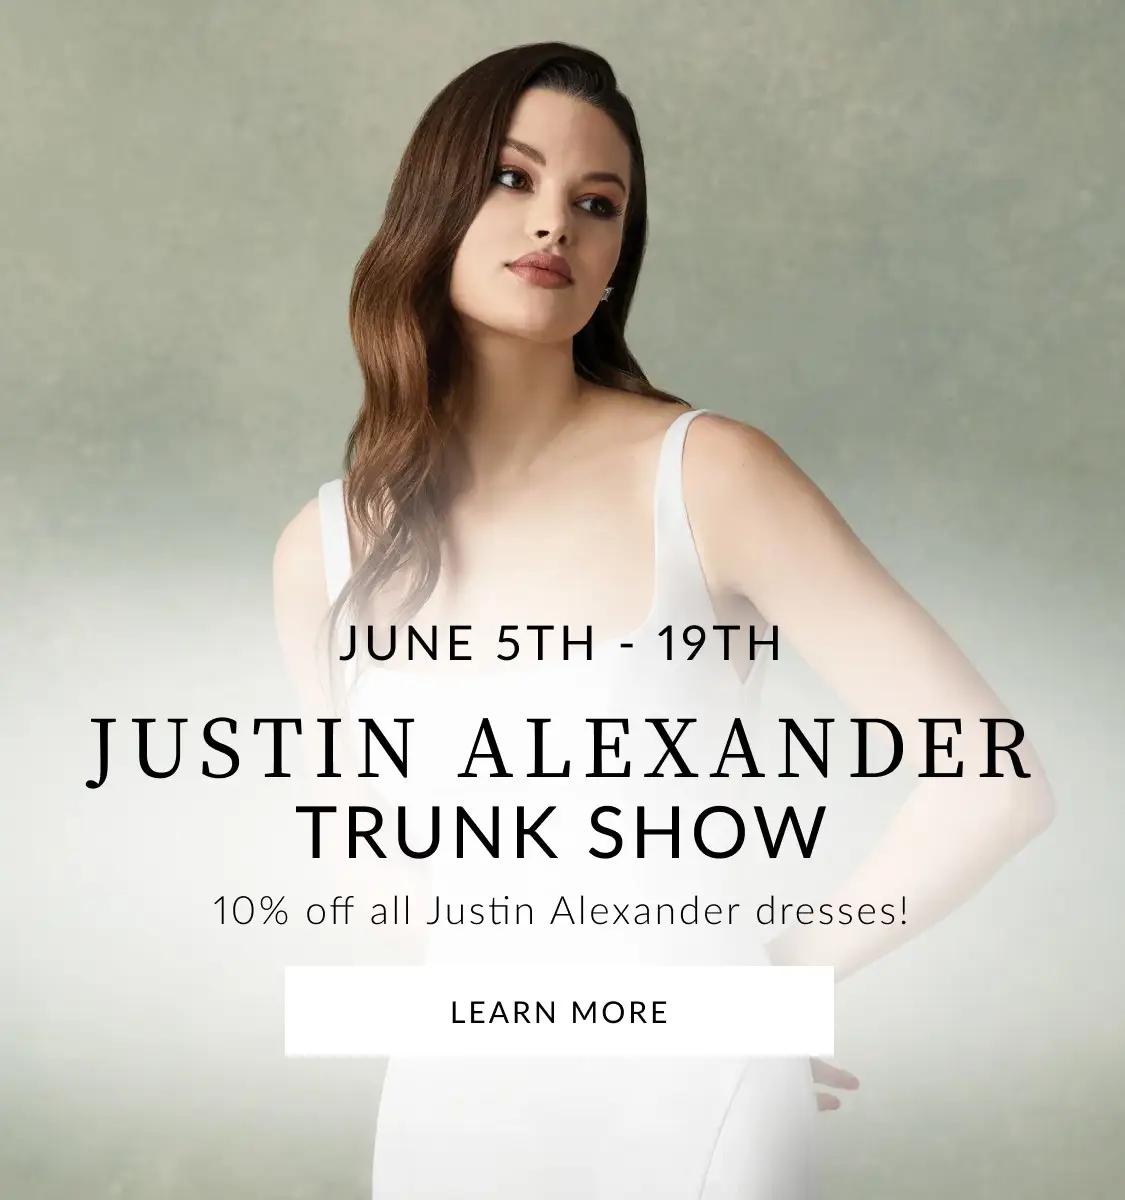 "Justin Alexander Trunk Show" banner for mobile